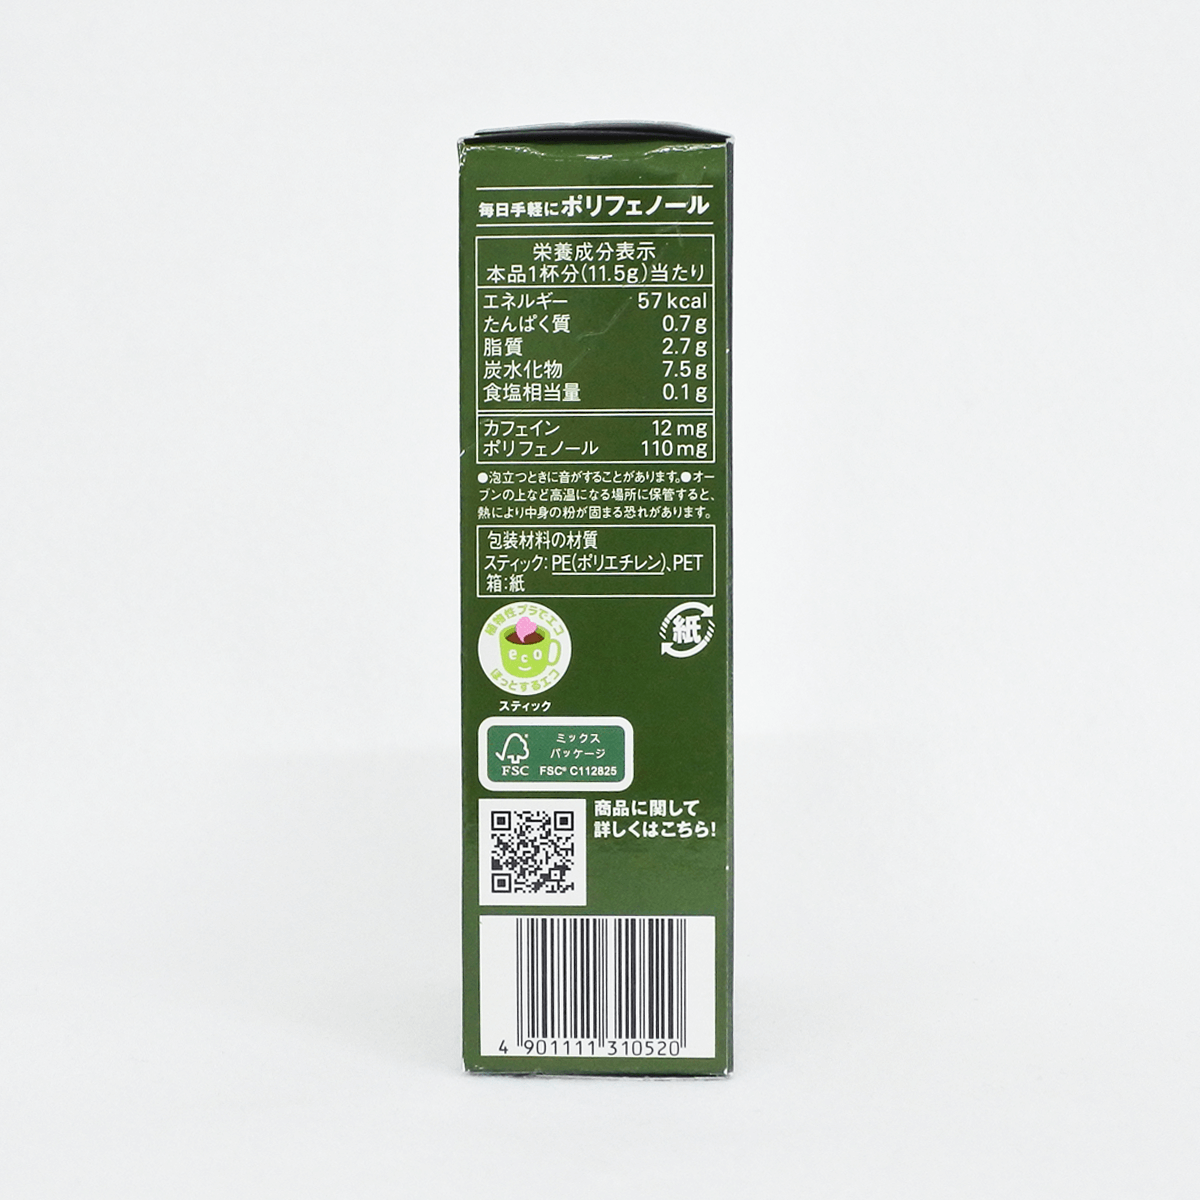 AGF Blendy CAFE LATORY 浓厚抹茶拿铁 11.5g×6包